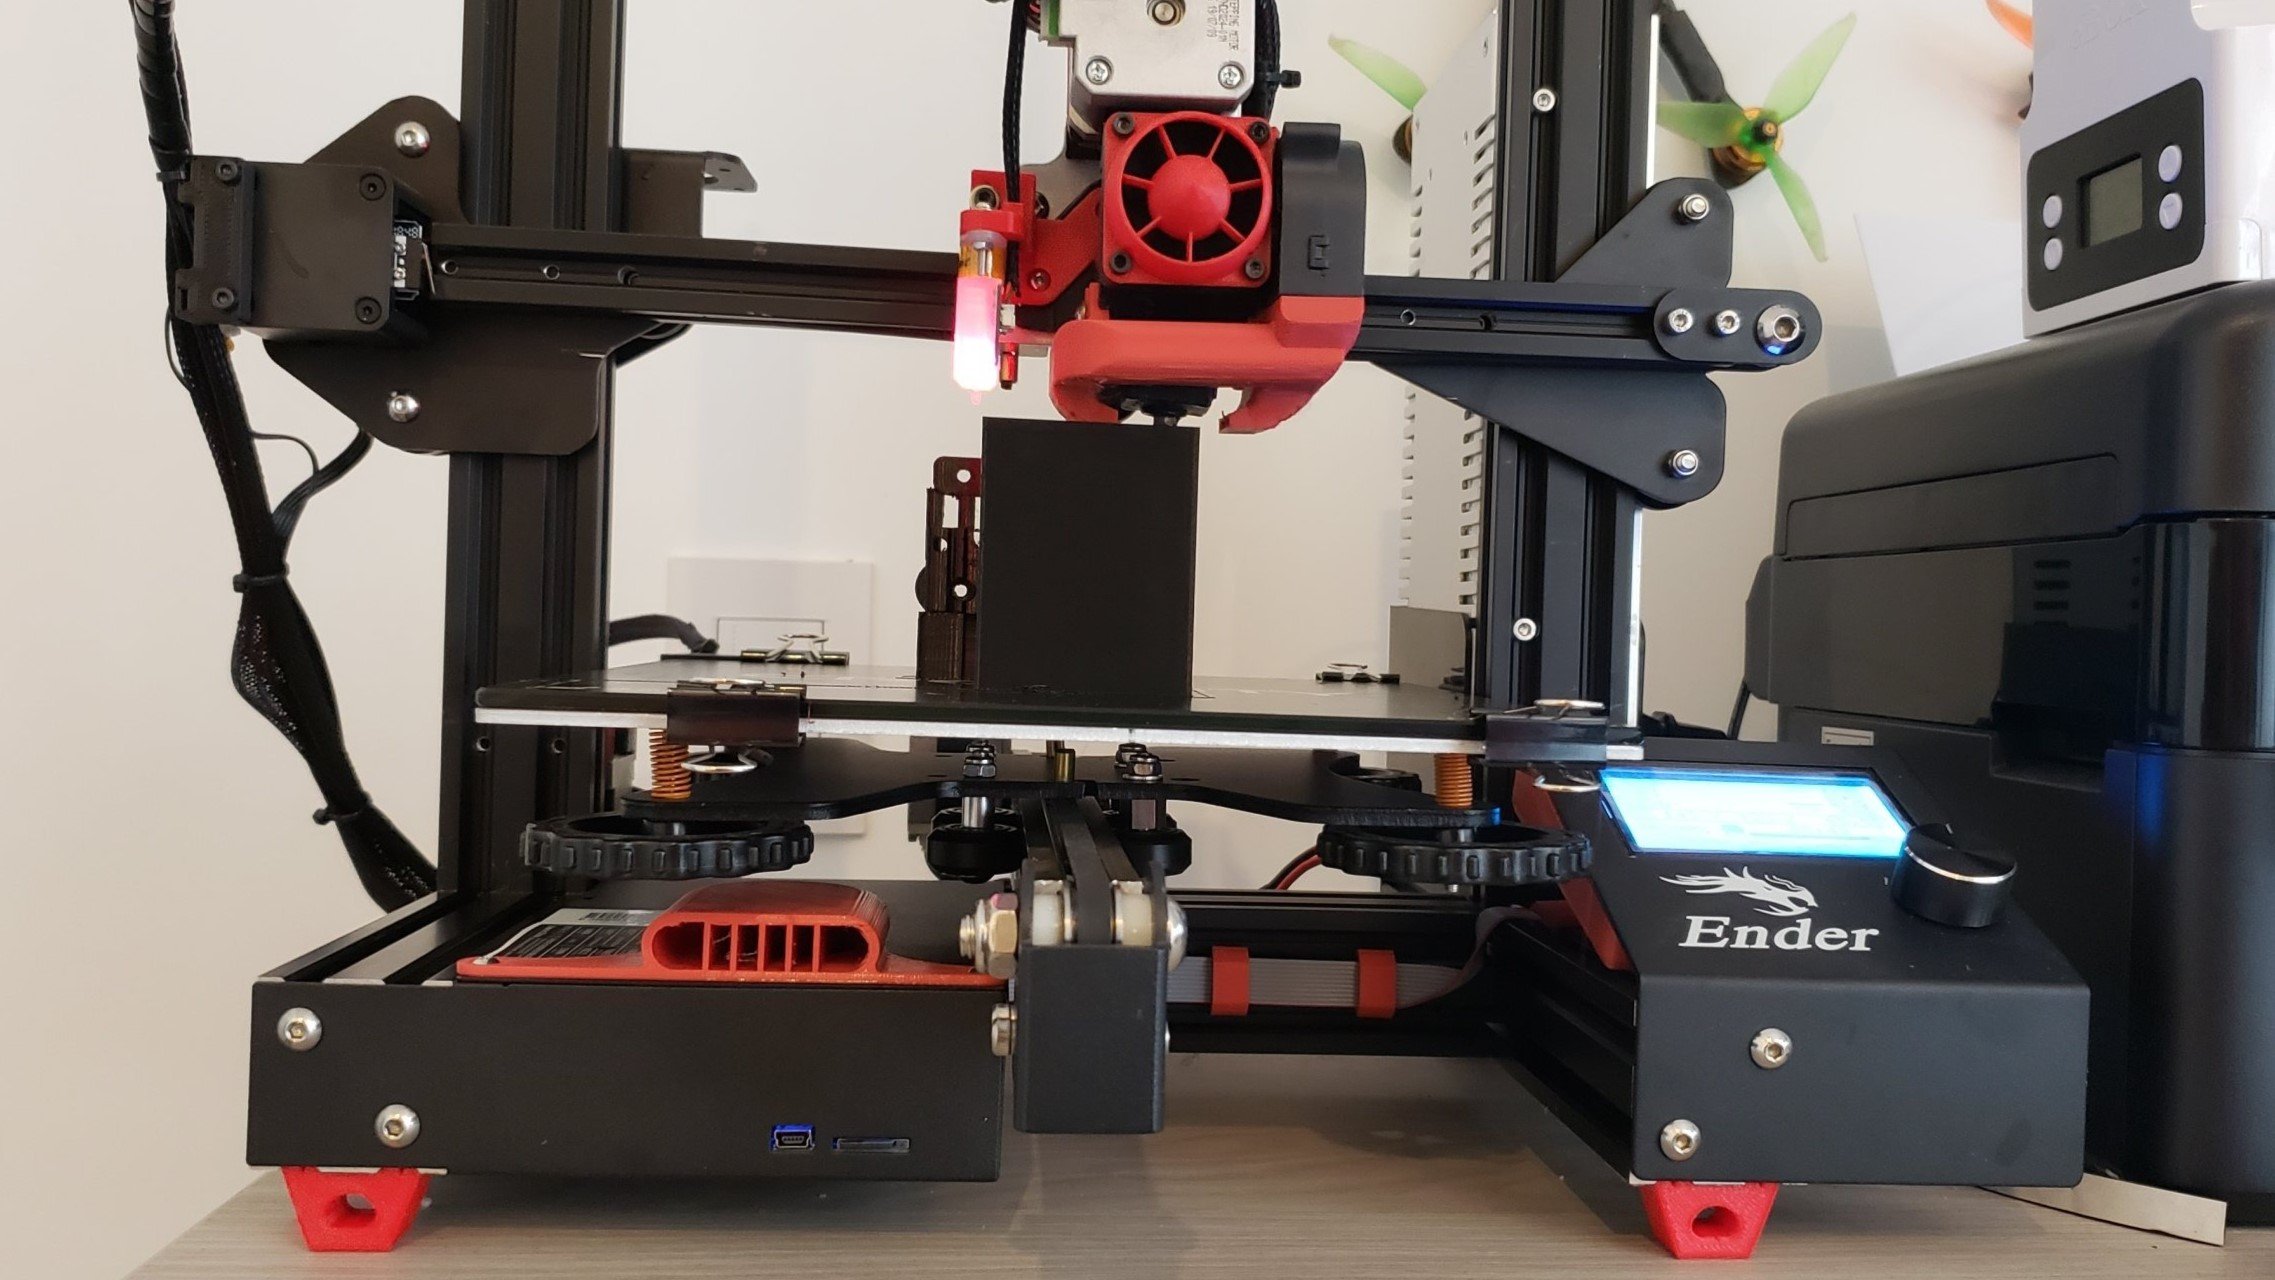 Ender 3 (V2/Pro) & TPU: How to Print Flexible Filaments